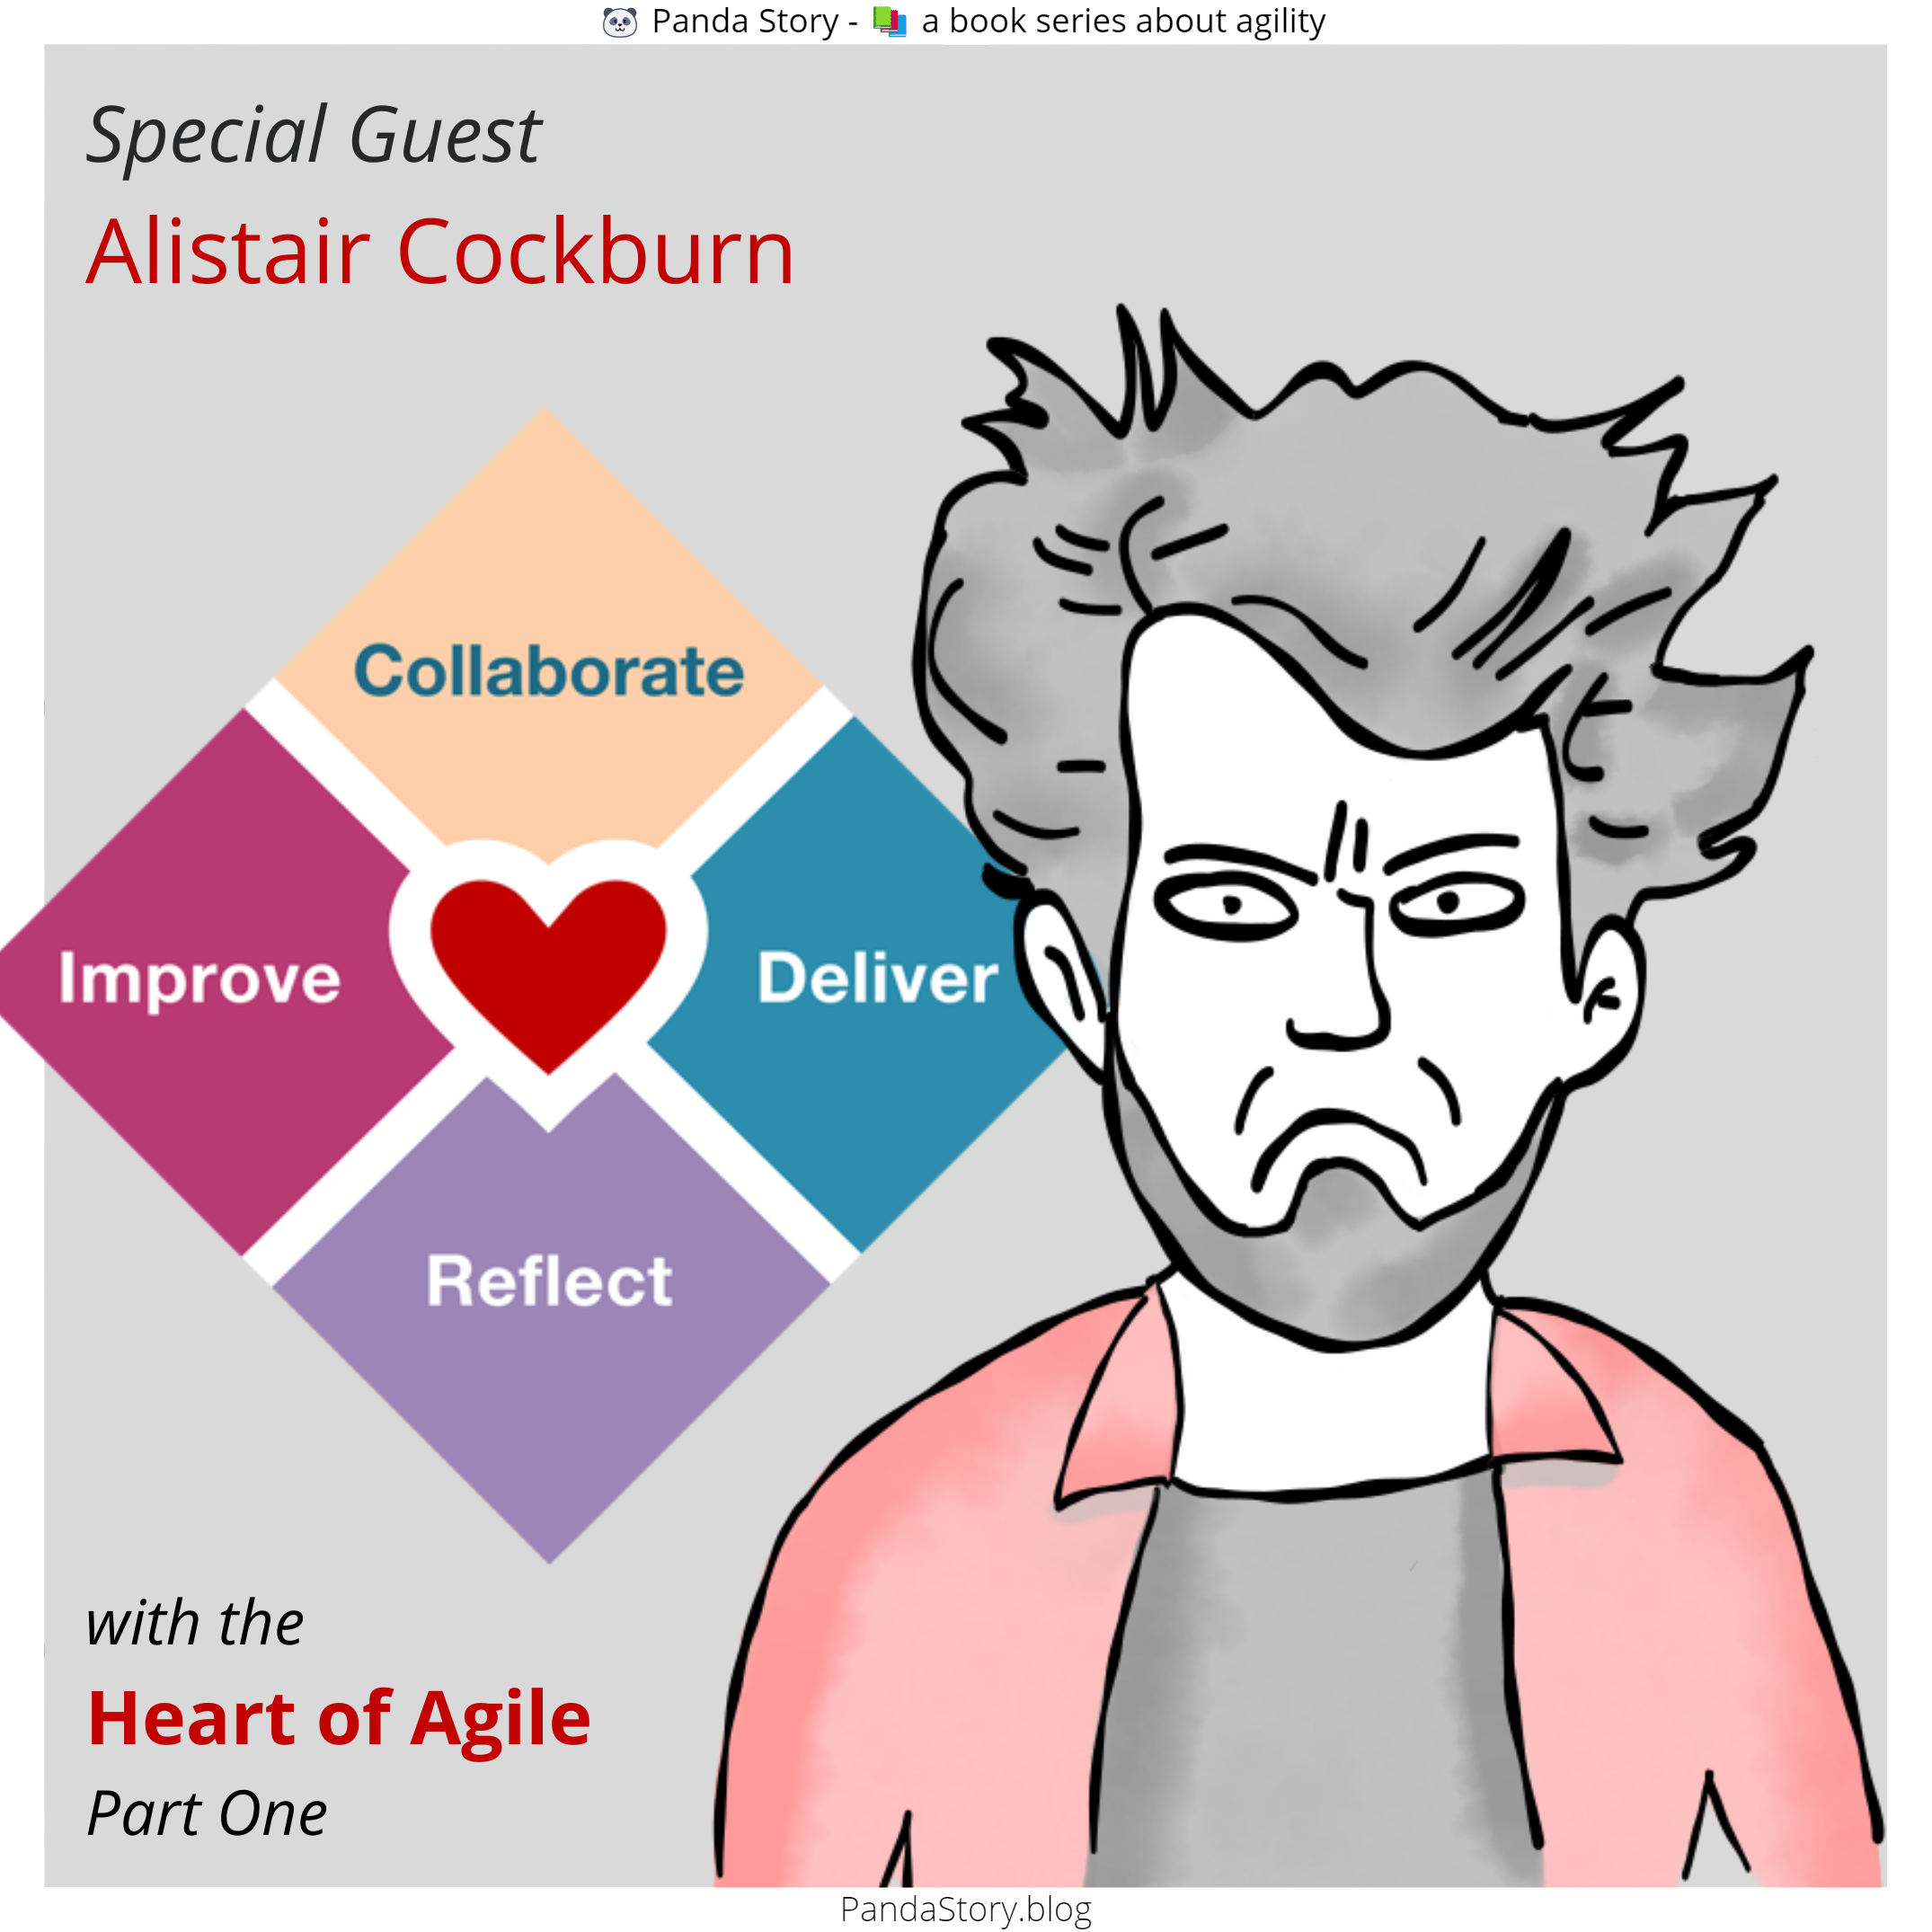 Heart of Agile from Alistair Cockburn